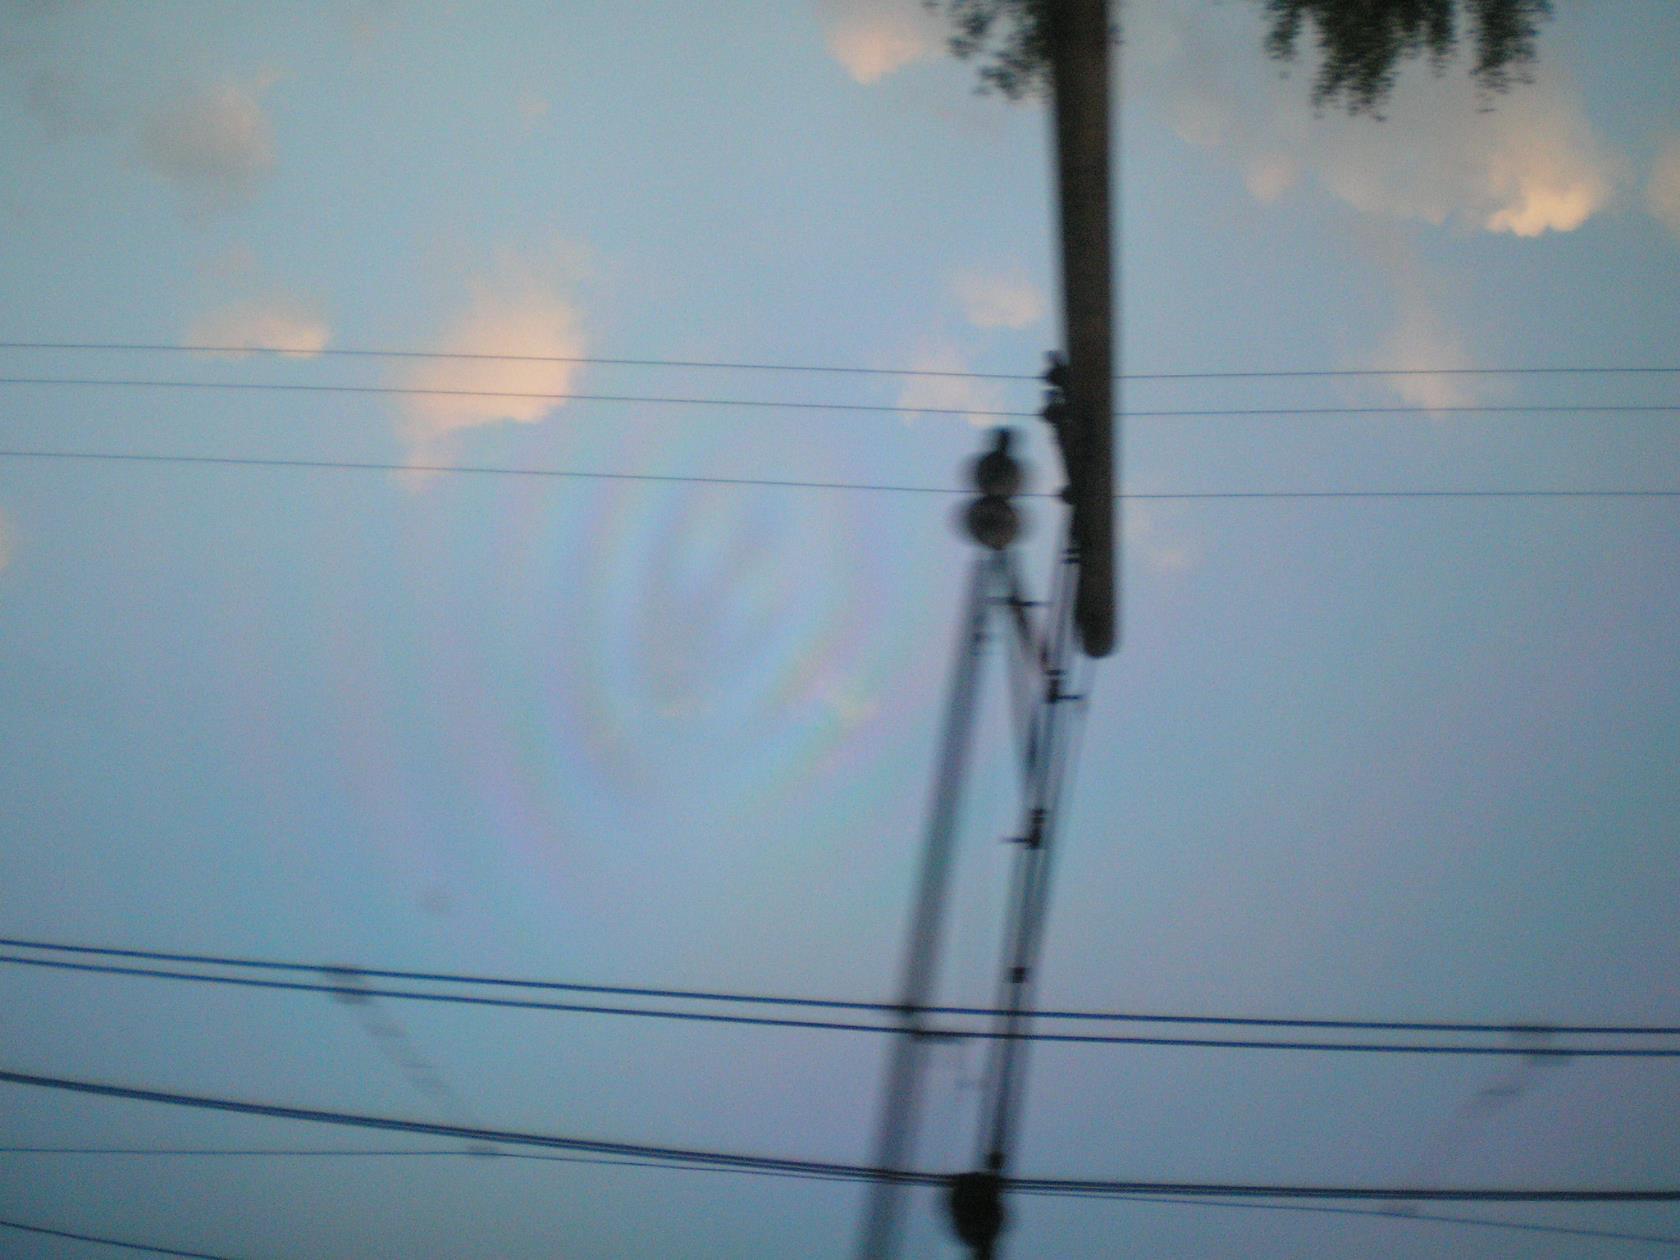  Спиральная радуга в небе (фото и видео) - фото 4